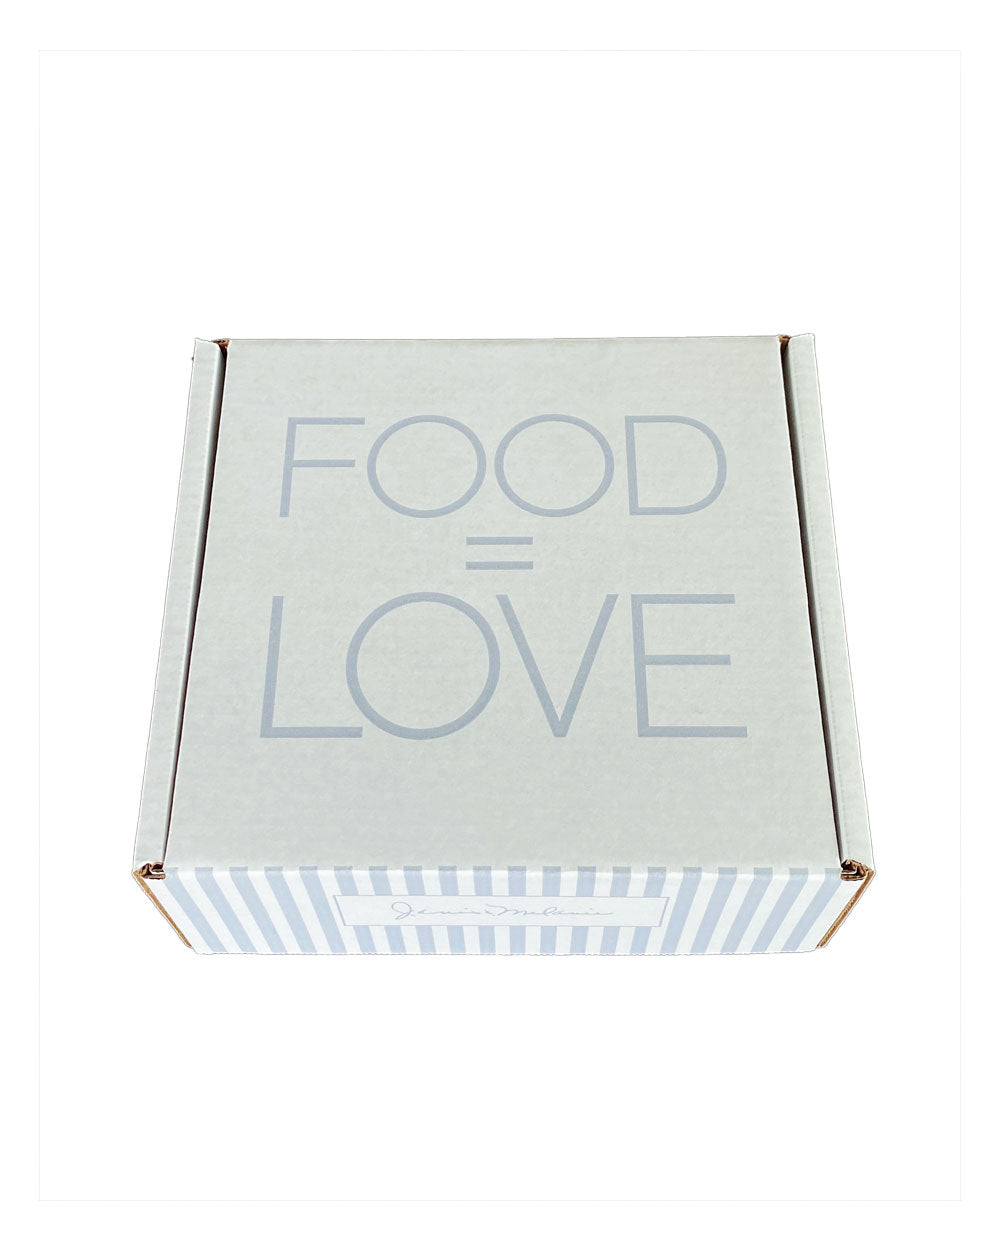 Food=Love small gift box